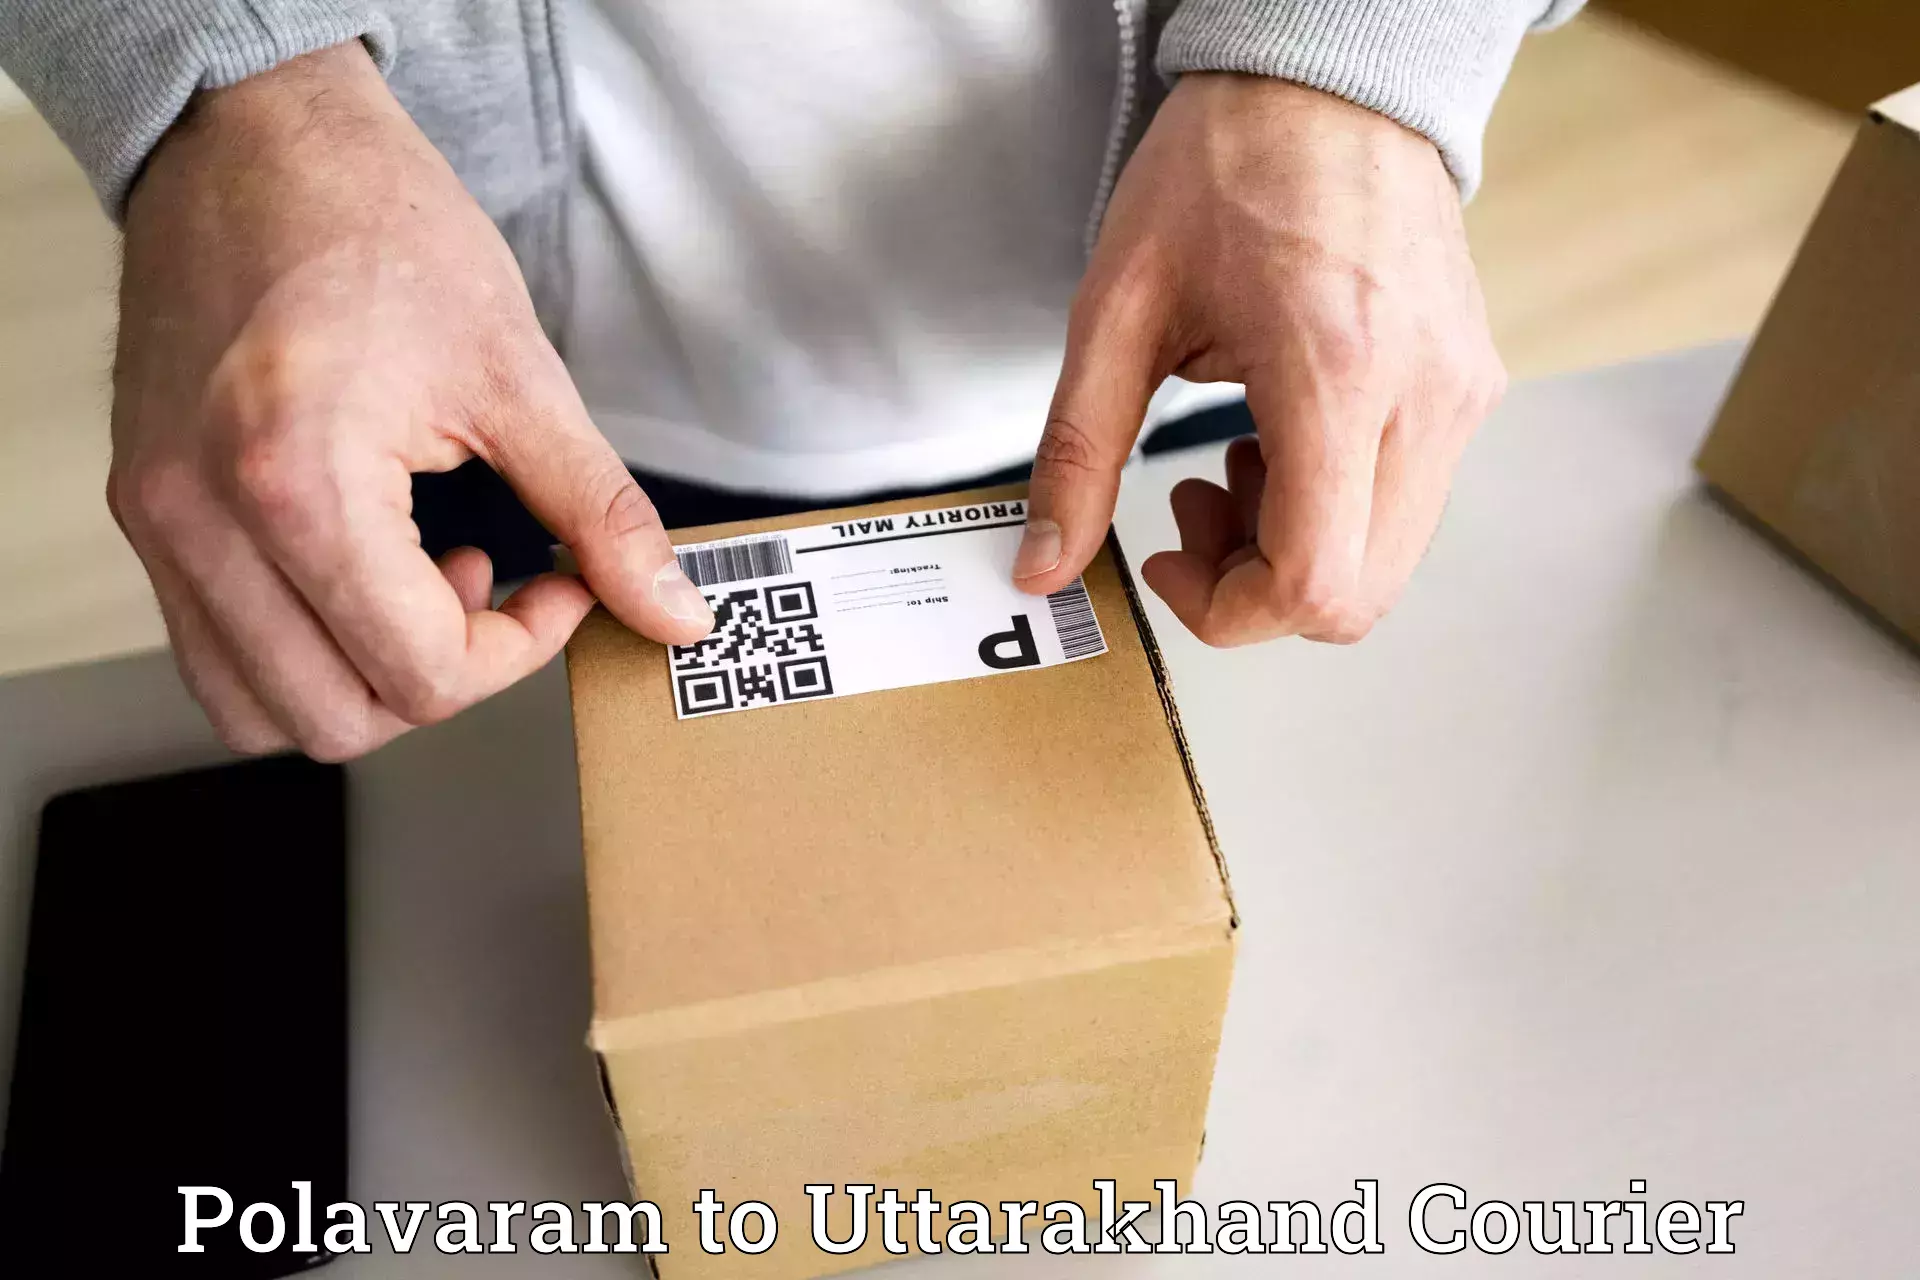 High-priority parcel service Polavaram to Rudrapur